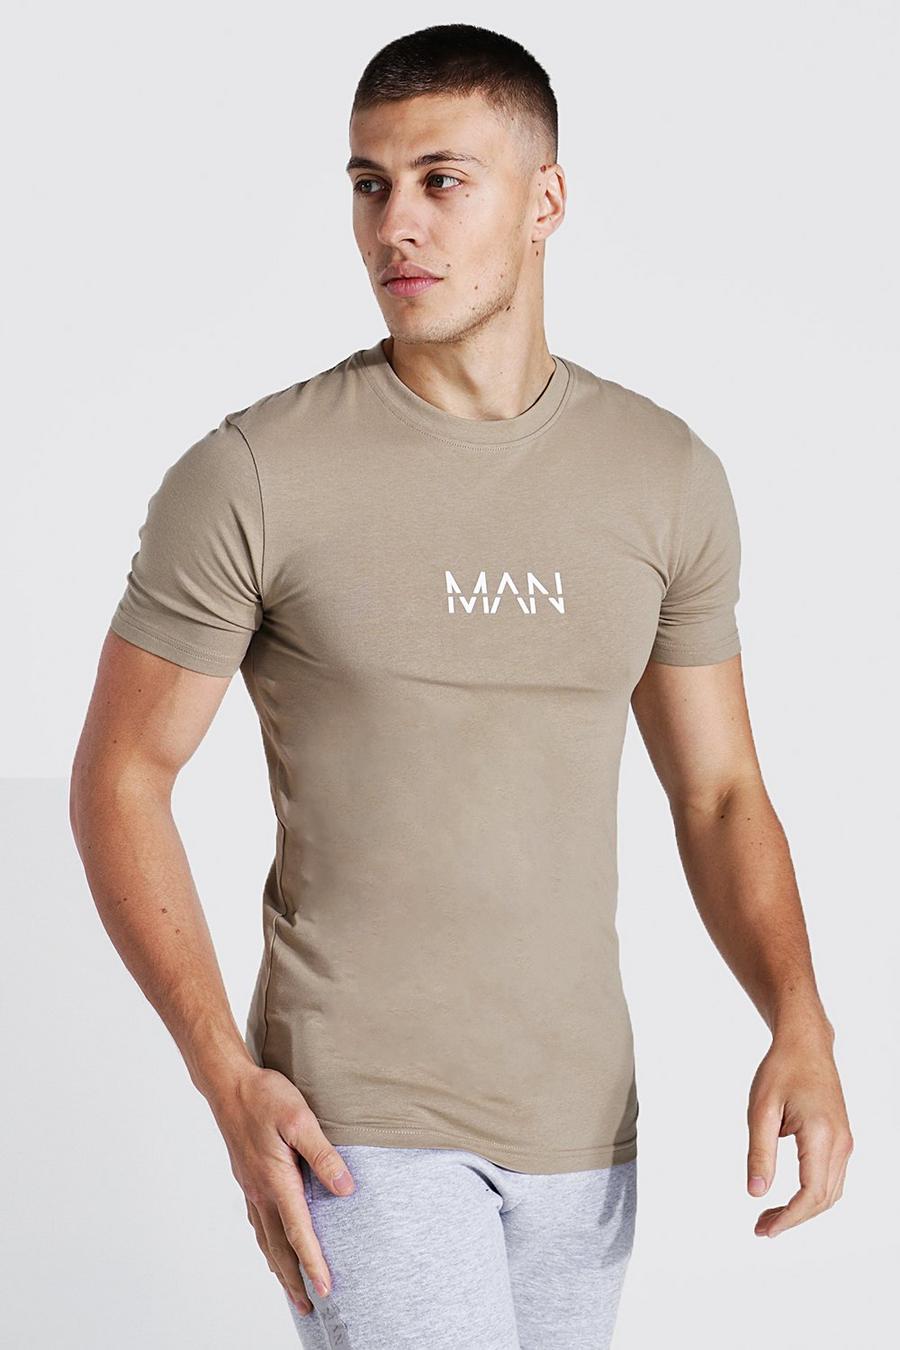 Camiseta MAN Original ajustada al músculo, Sage silver image number 1